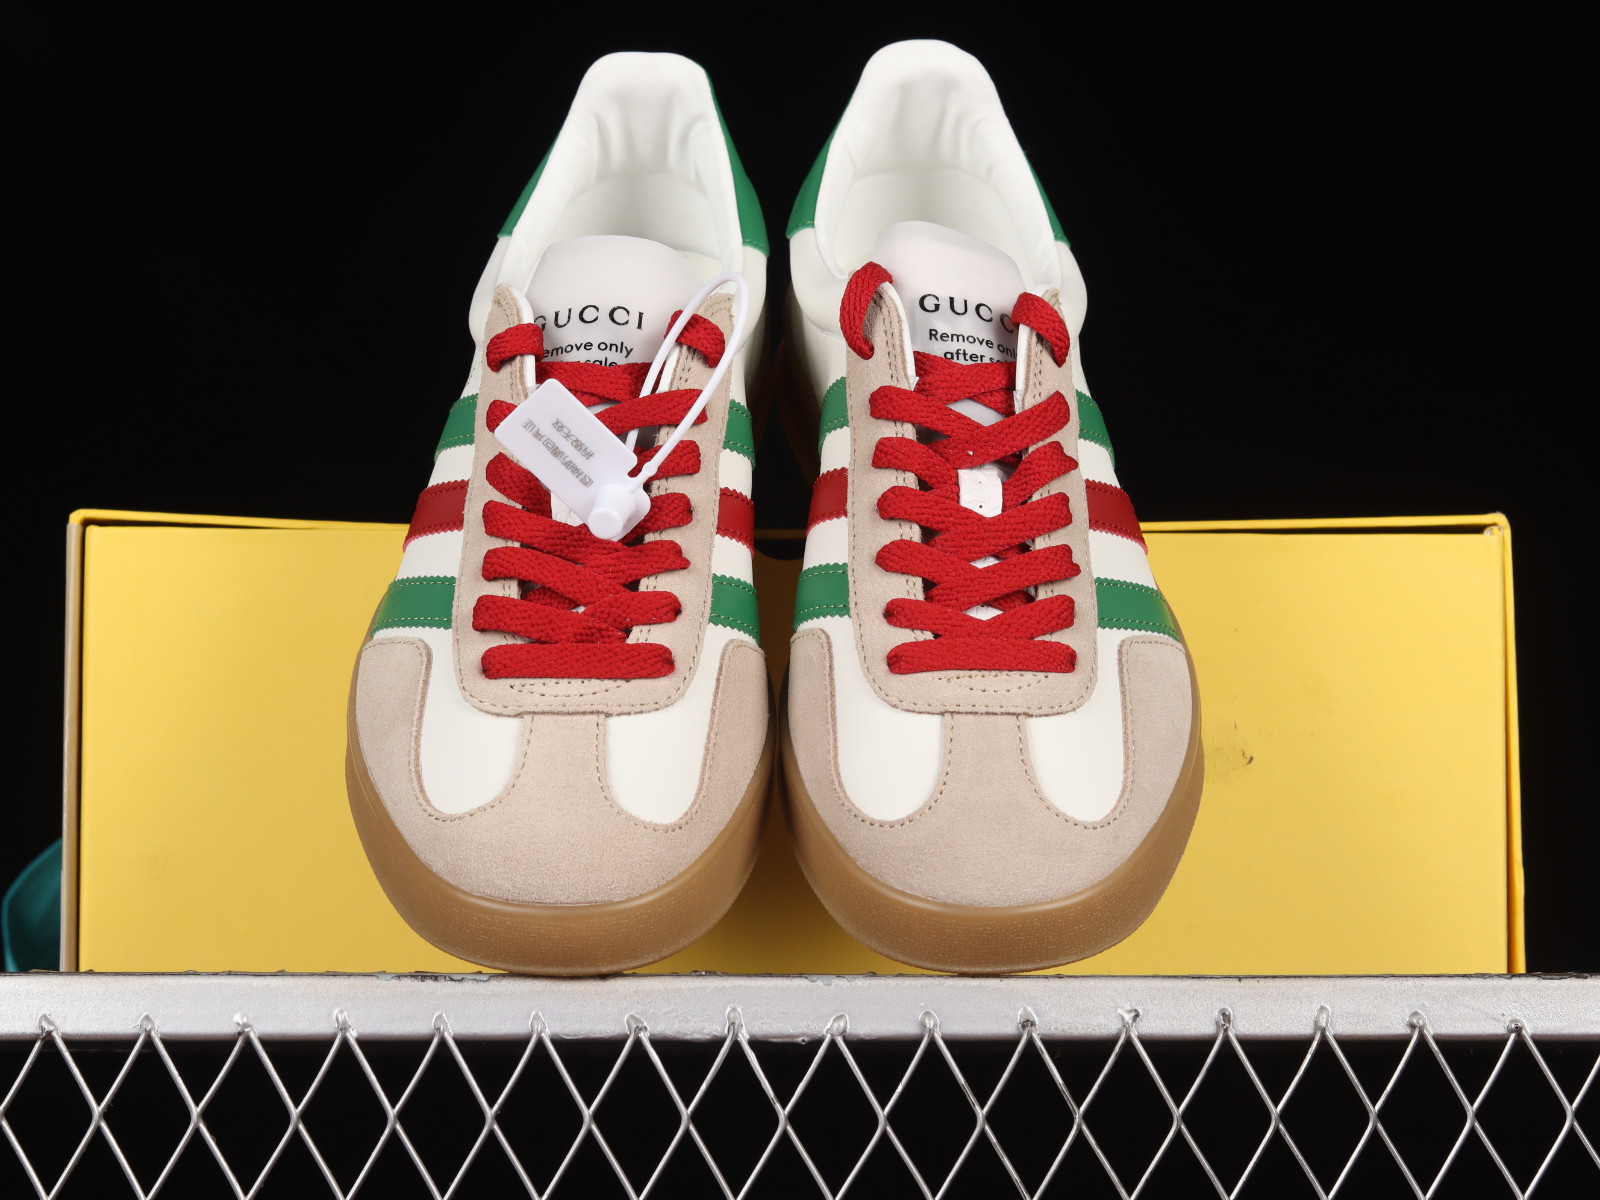 Brand New Adidas x Gucci men's Gazelle sneaker US 8.5 / UK 8 / EU 42